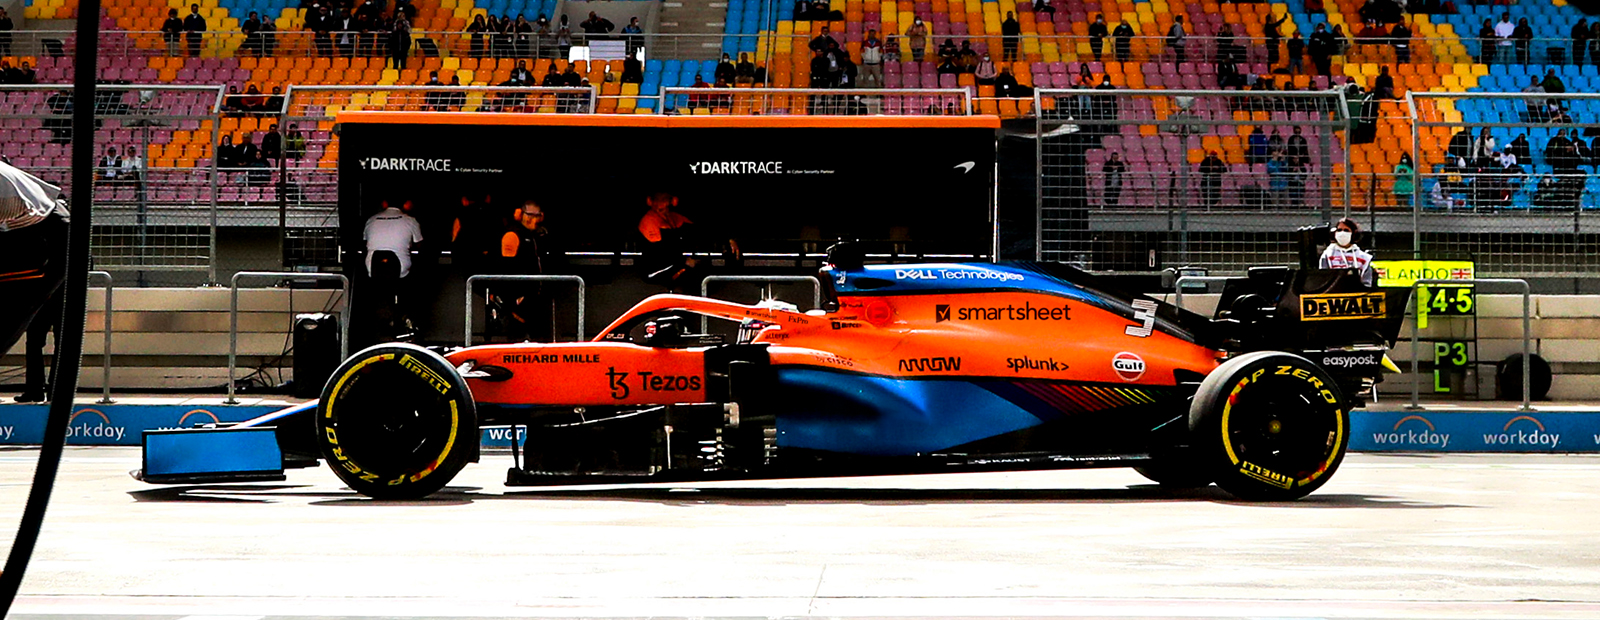 McLaren Formula 1 car with Smartsheet logo on engine cover 